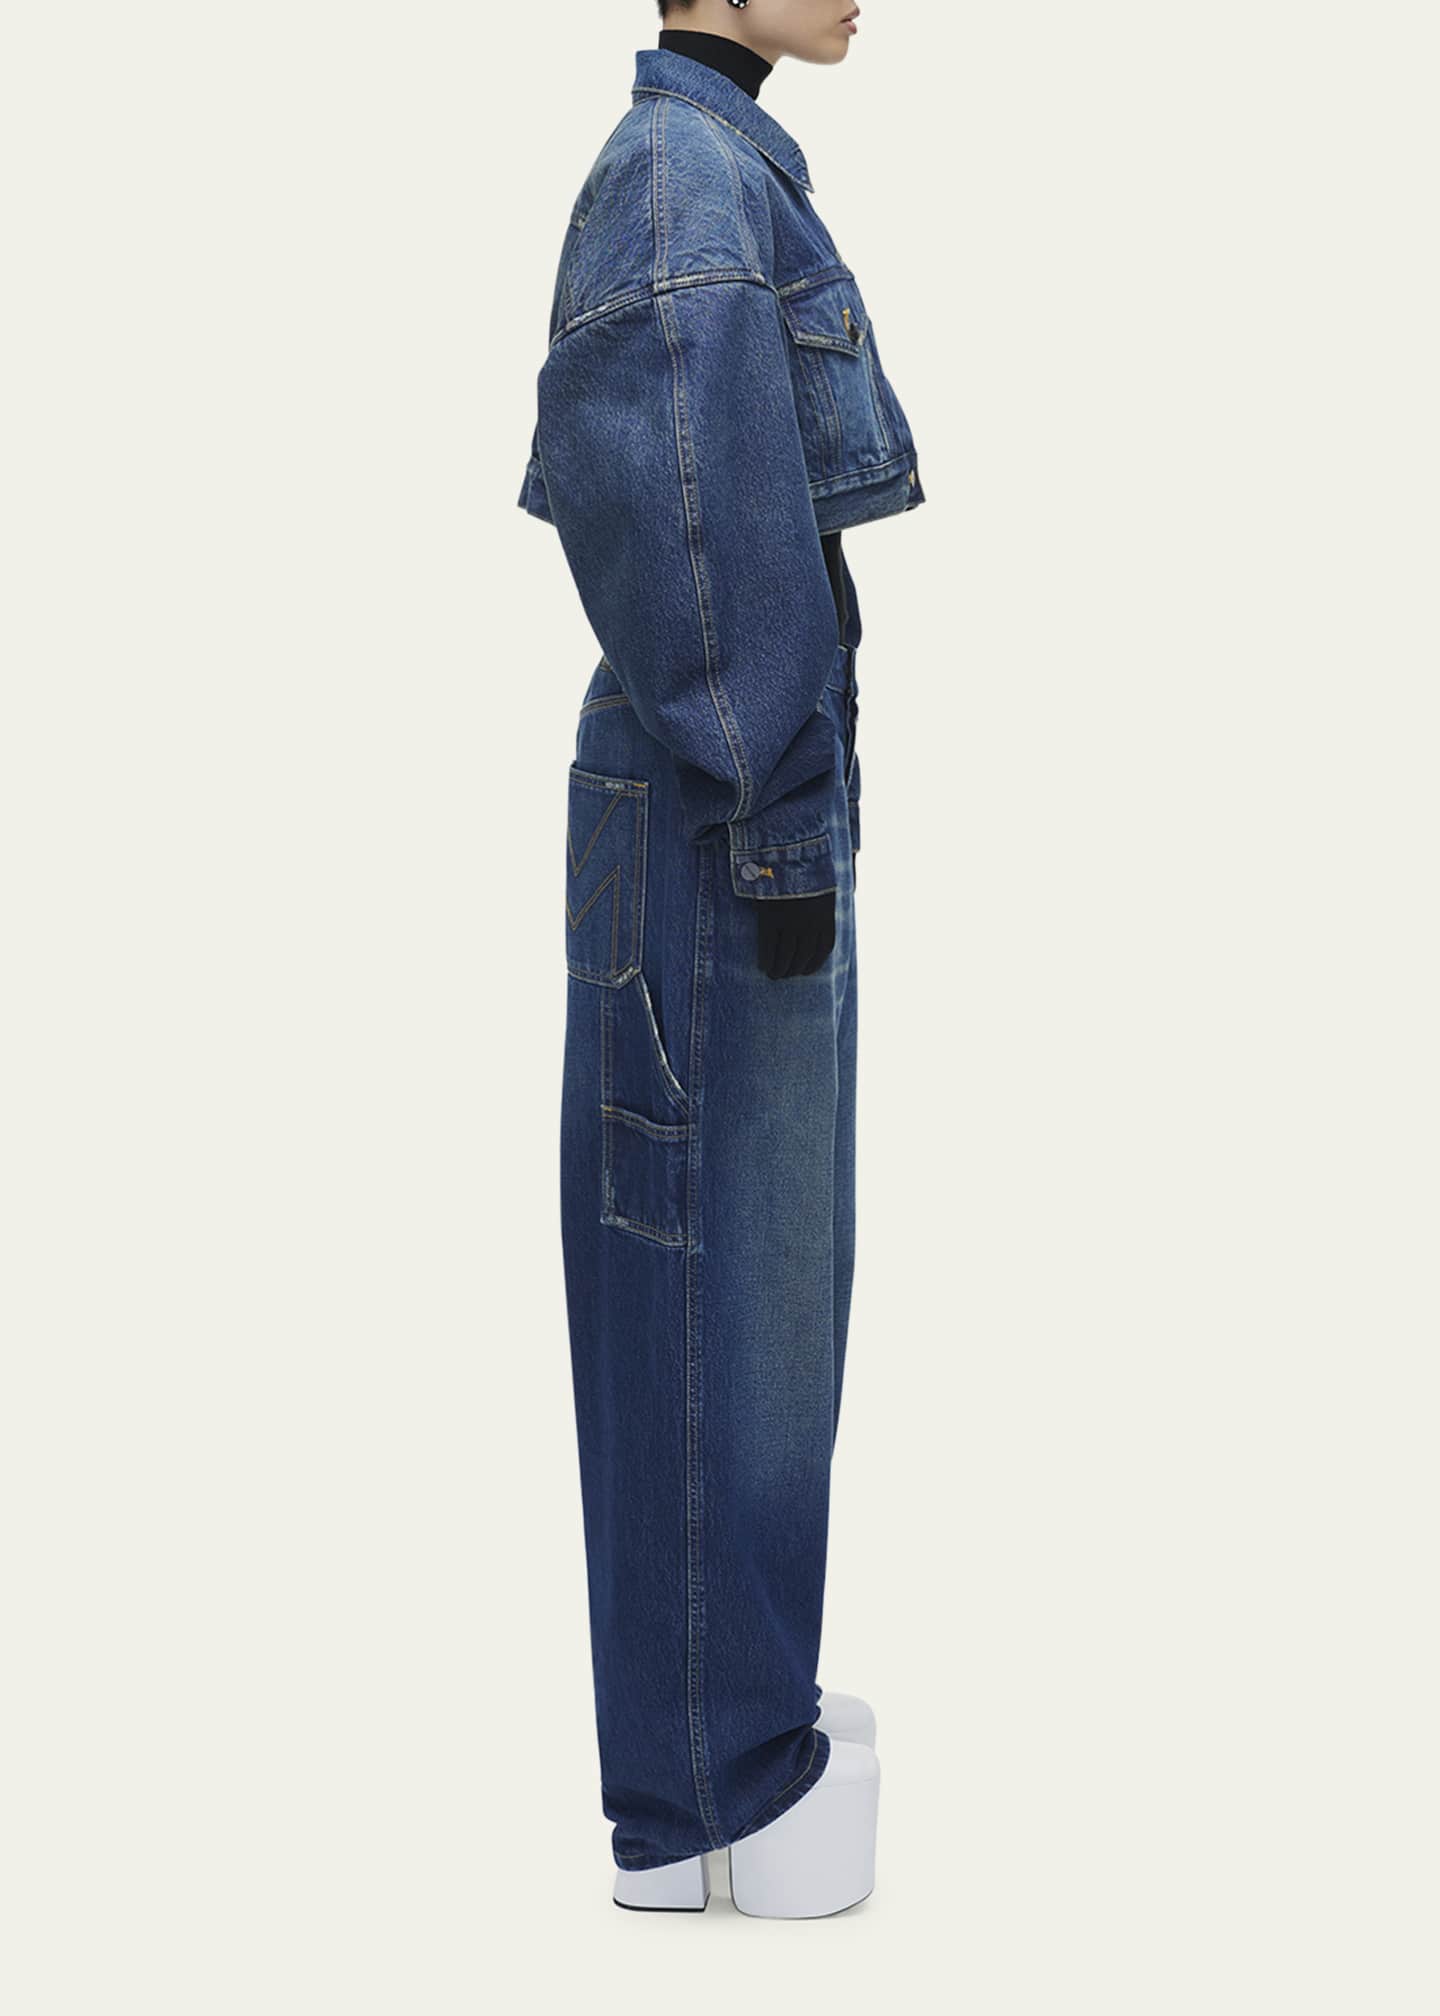 Marc Jacobs Cropped Denim Jacket